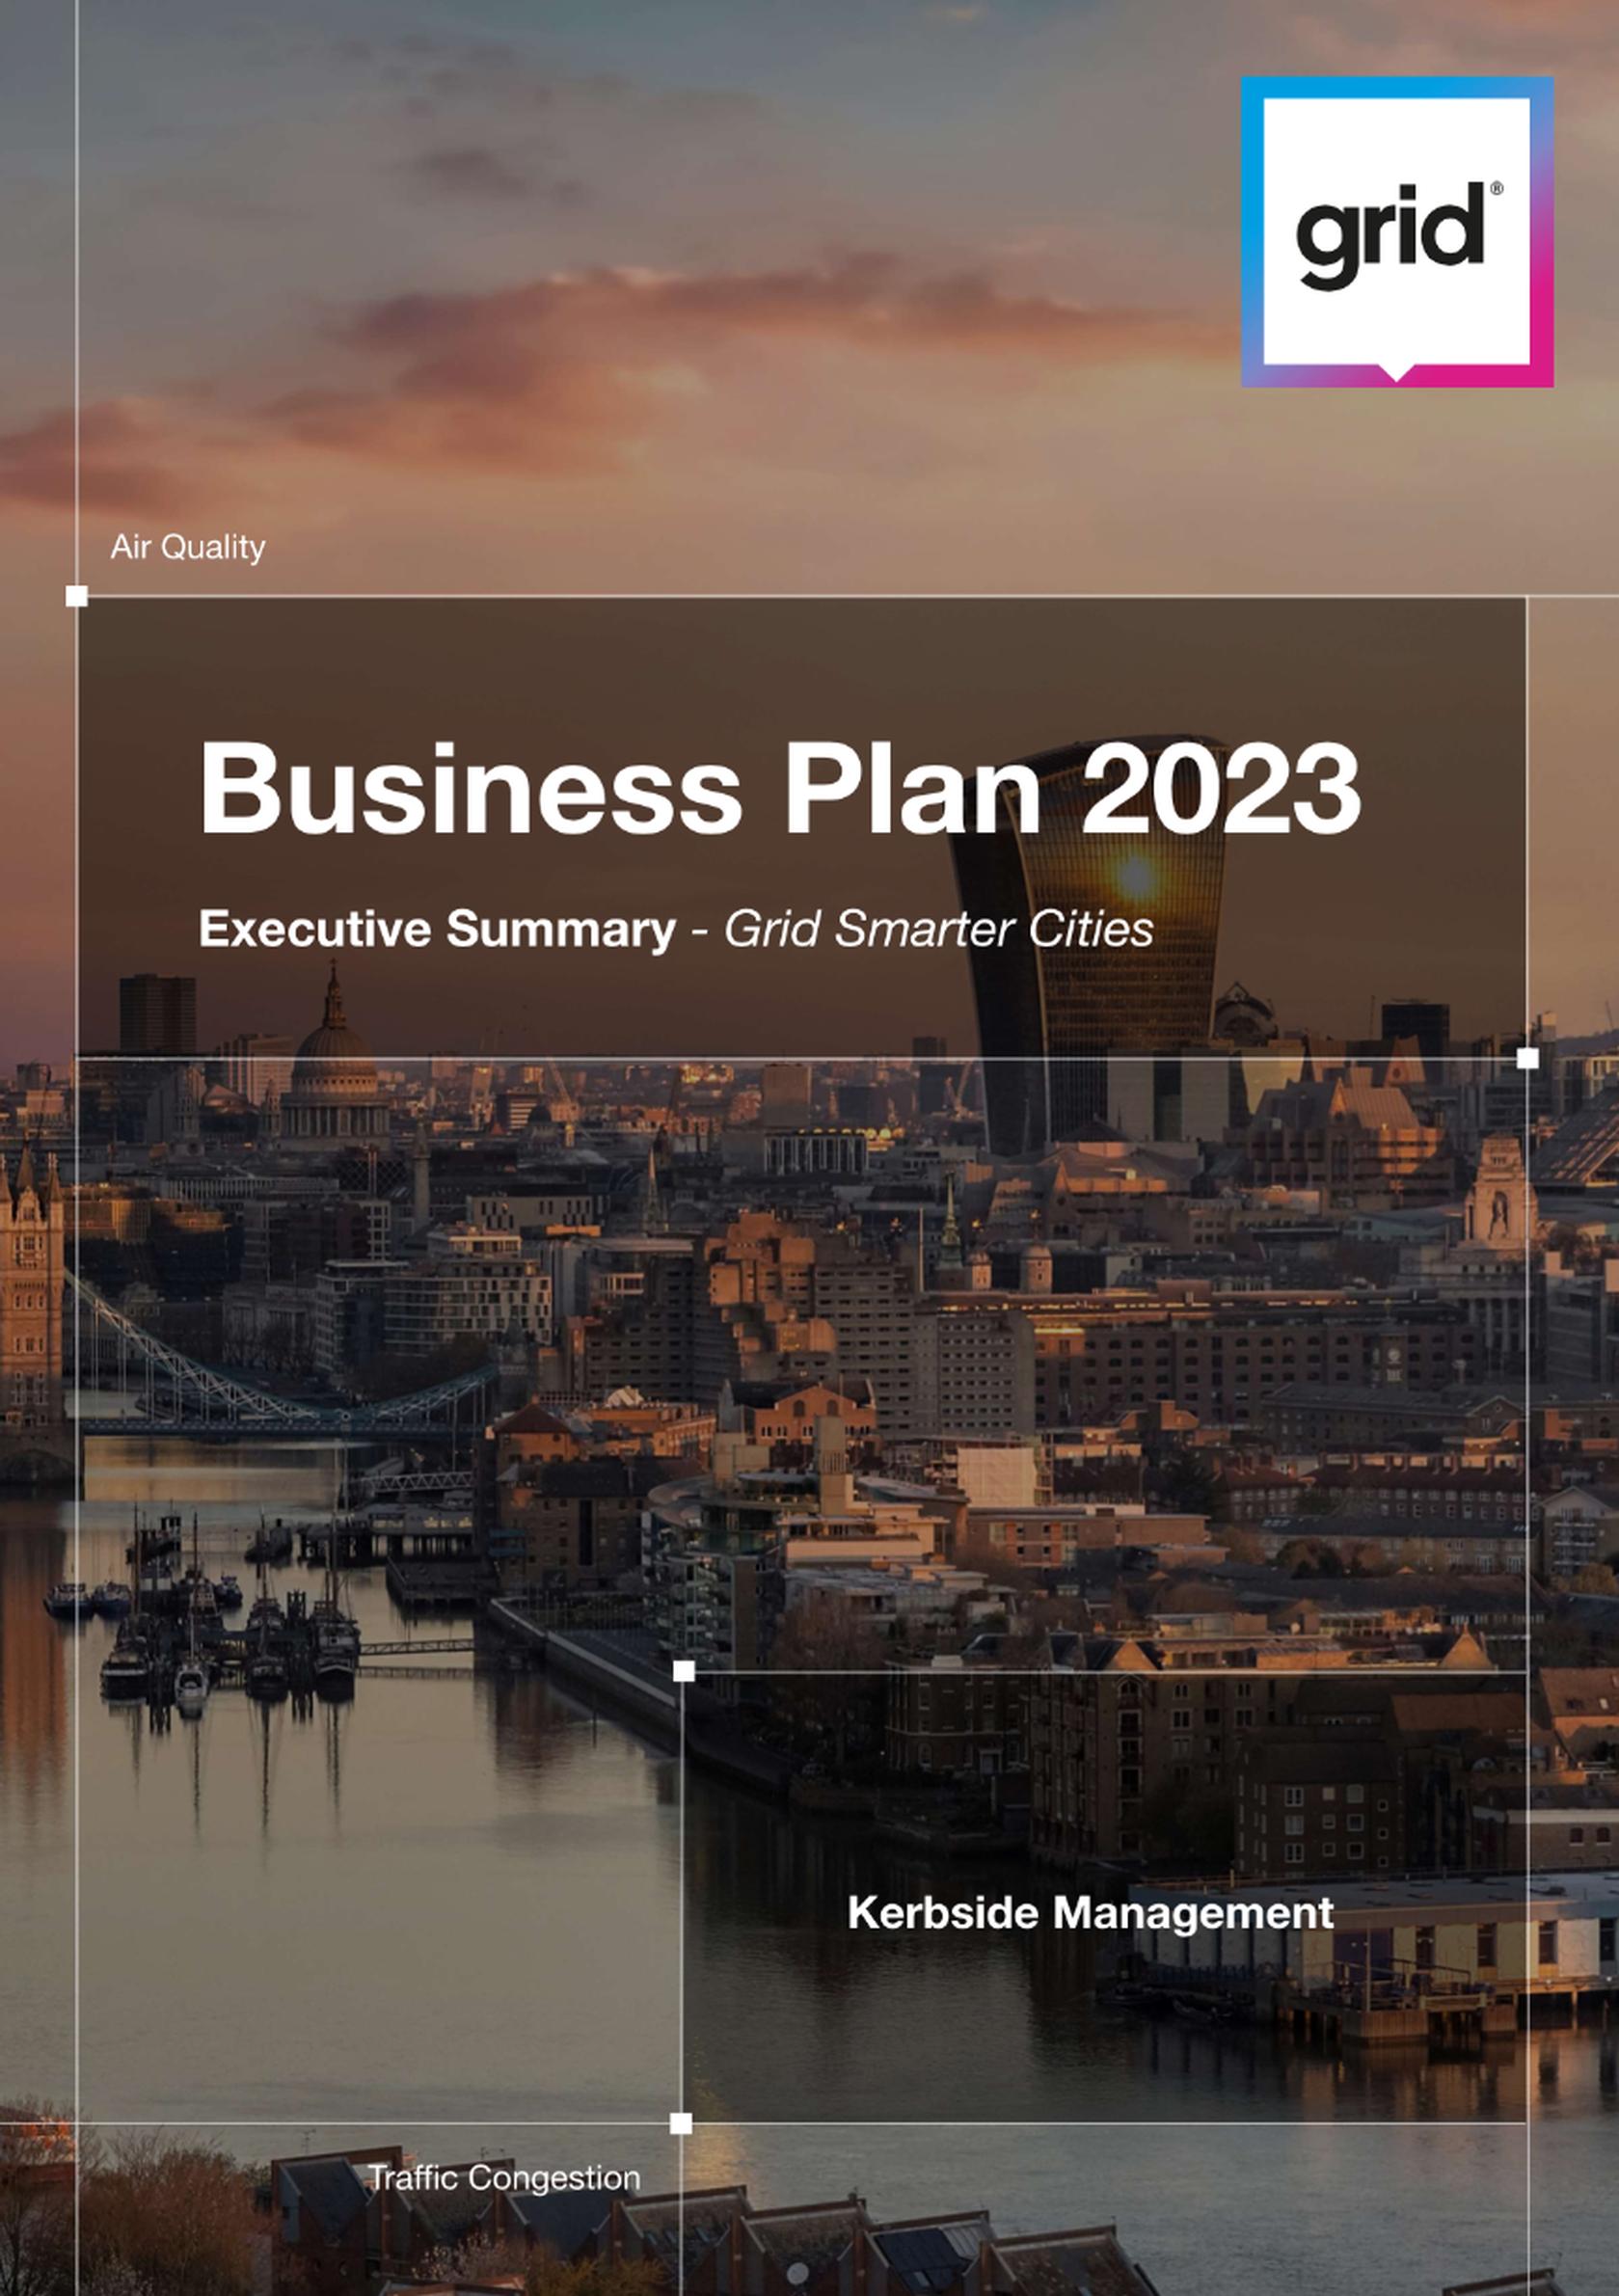 Grid Smarter Cities` business plan